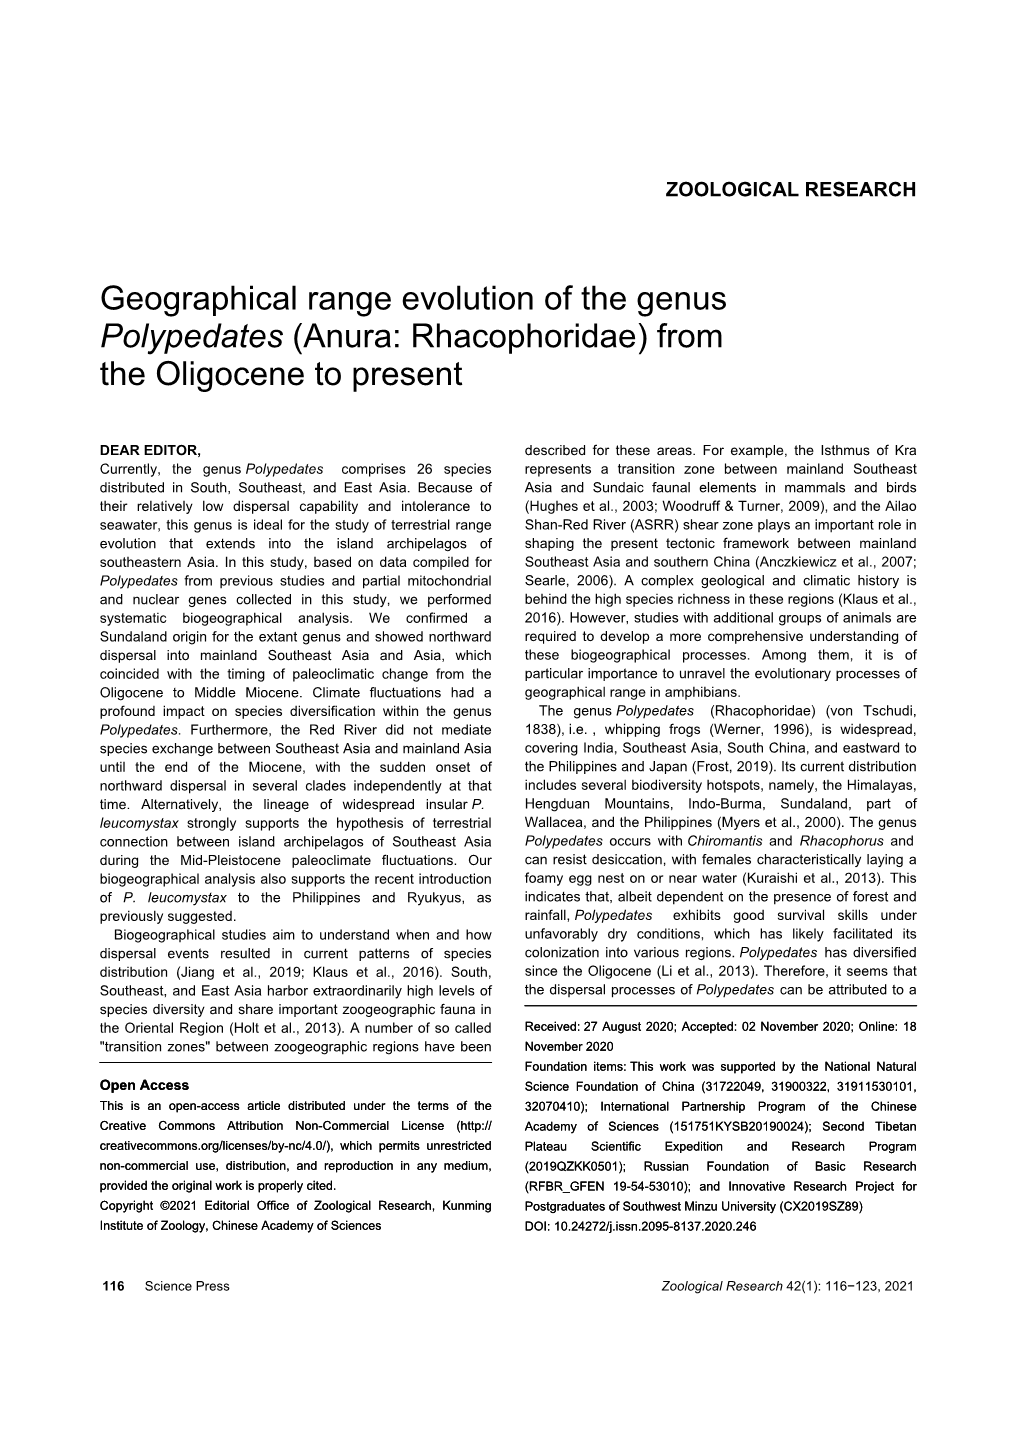 Geographical Range Evolution of the Genus Polypedates (Anura: Rhacophoridae) from the Oligocene to Present